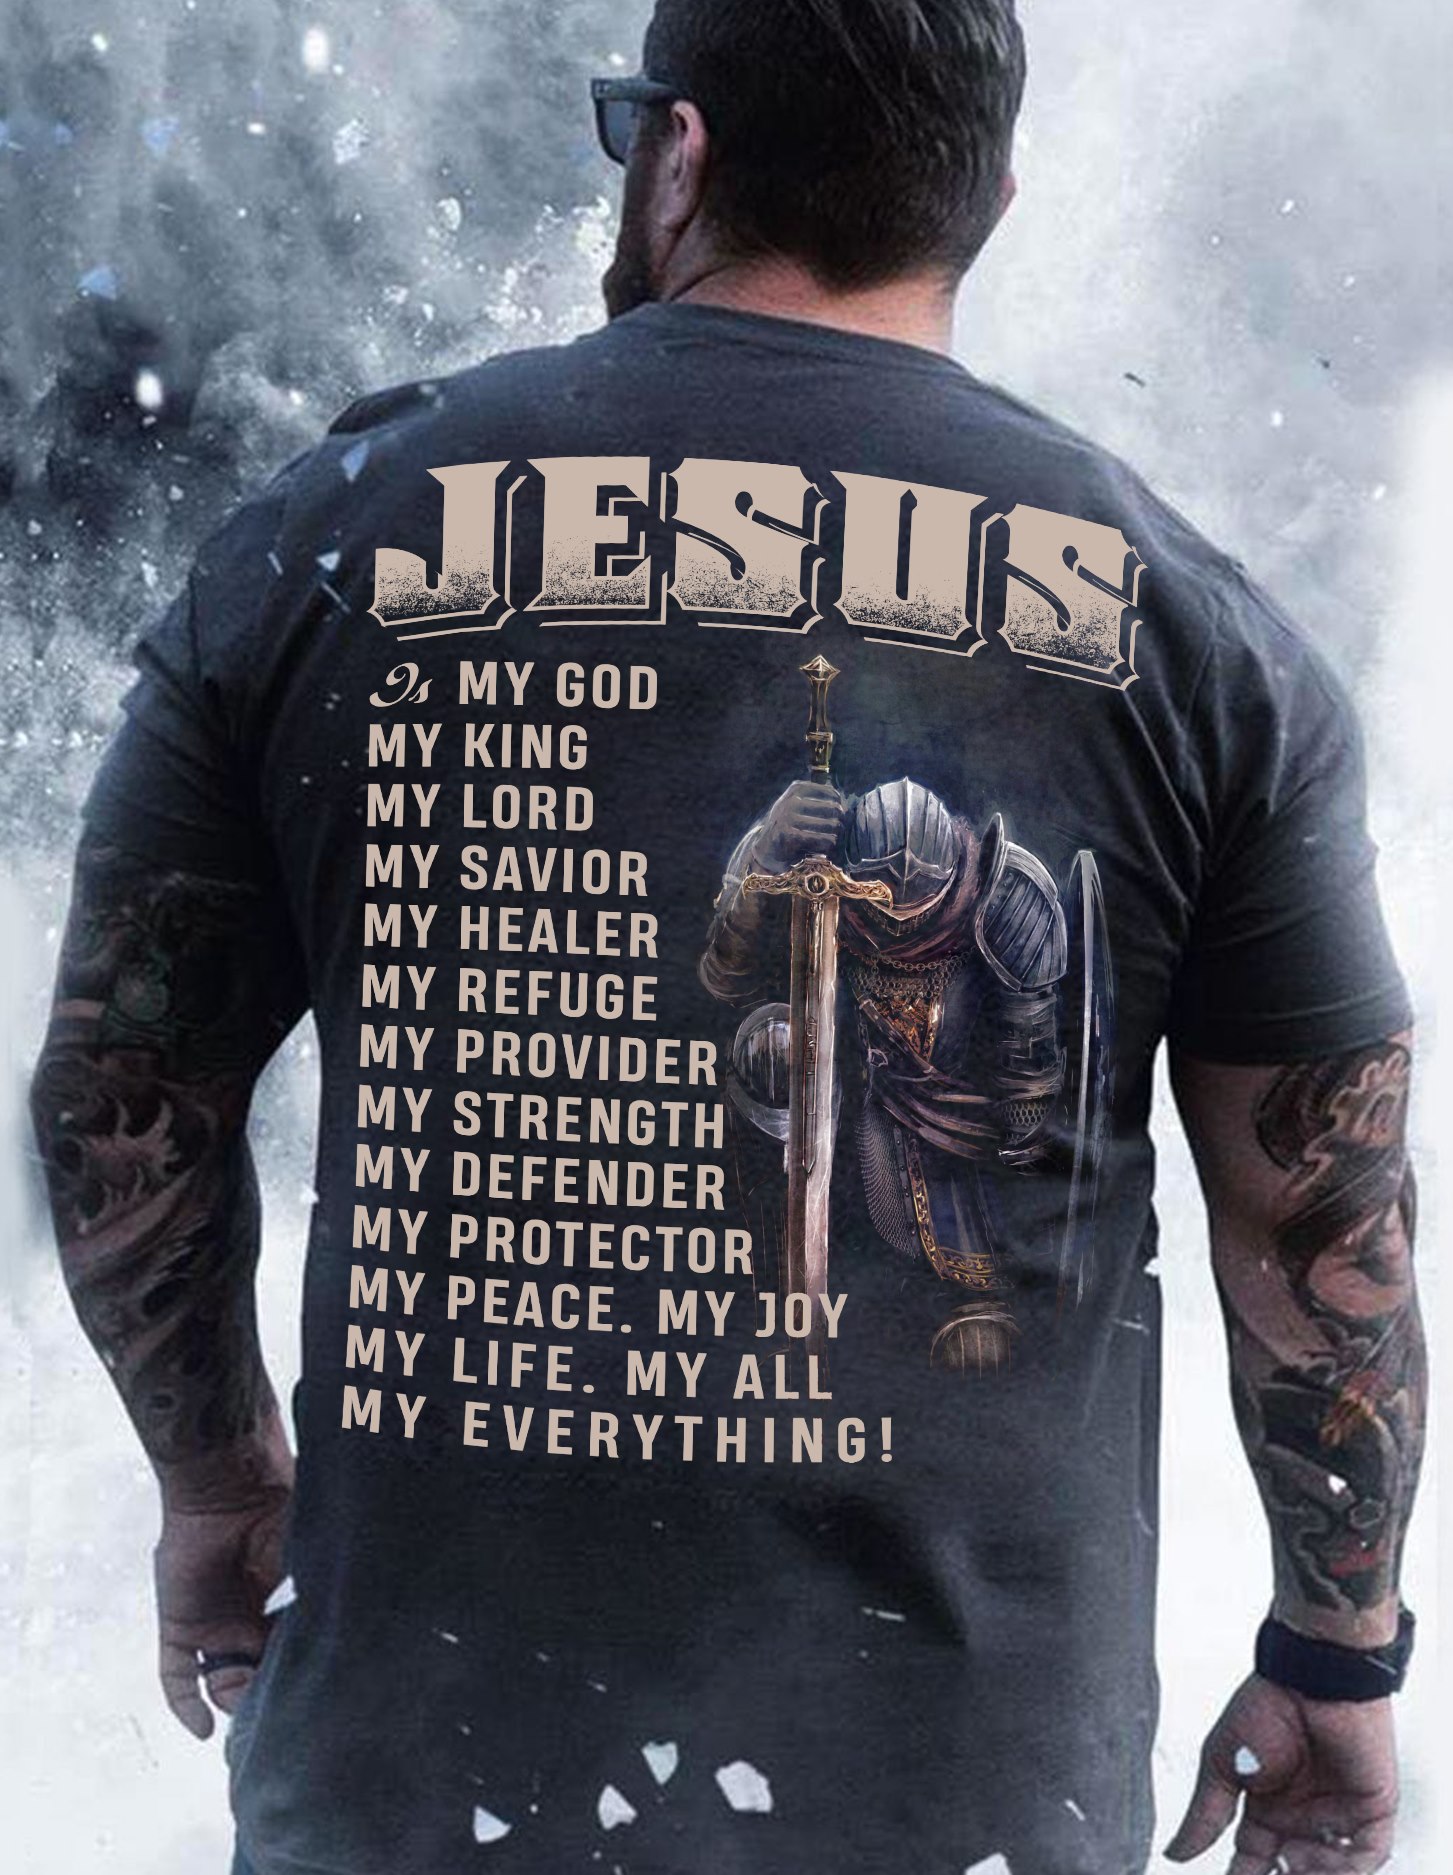 Soldier Jesus - Jesus Is My God, My King, My Lord, My Savior